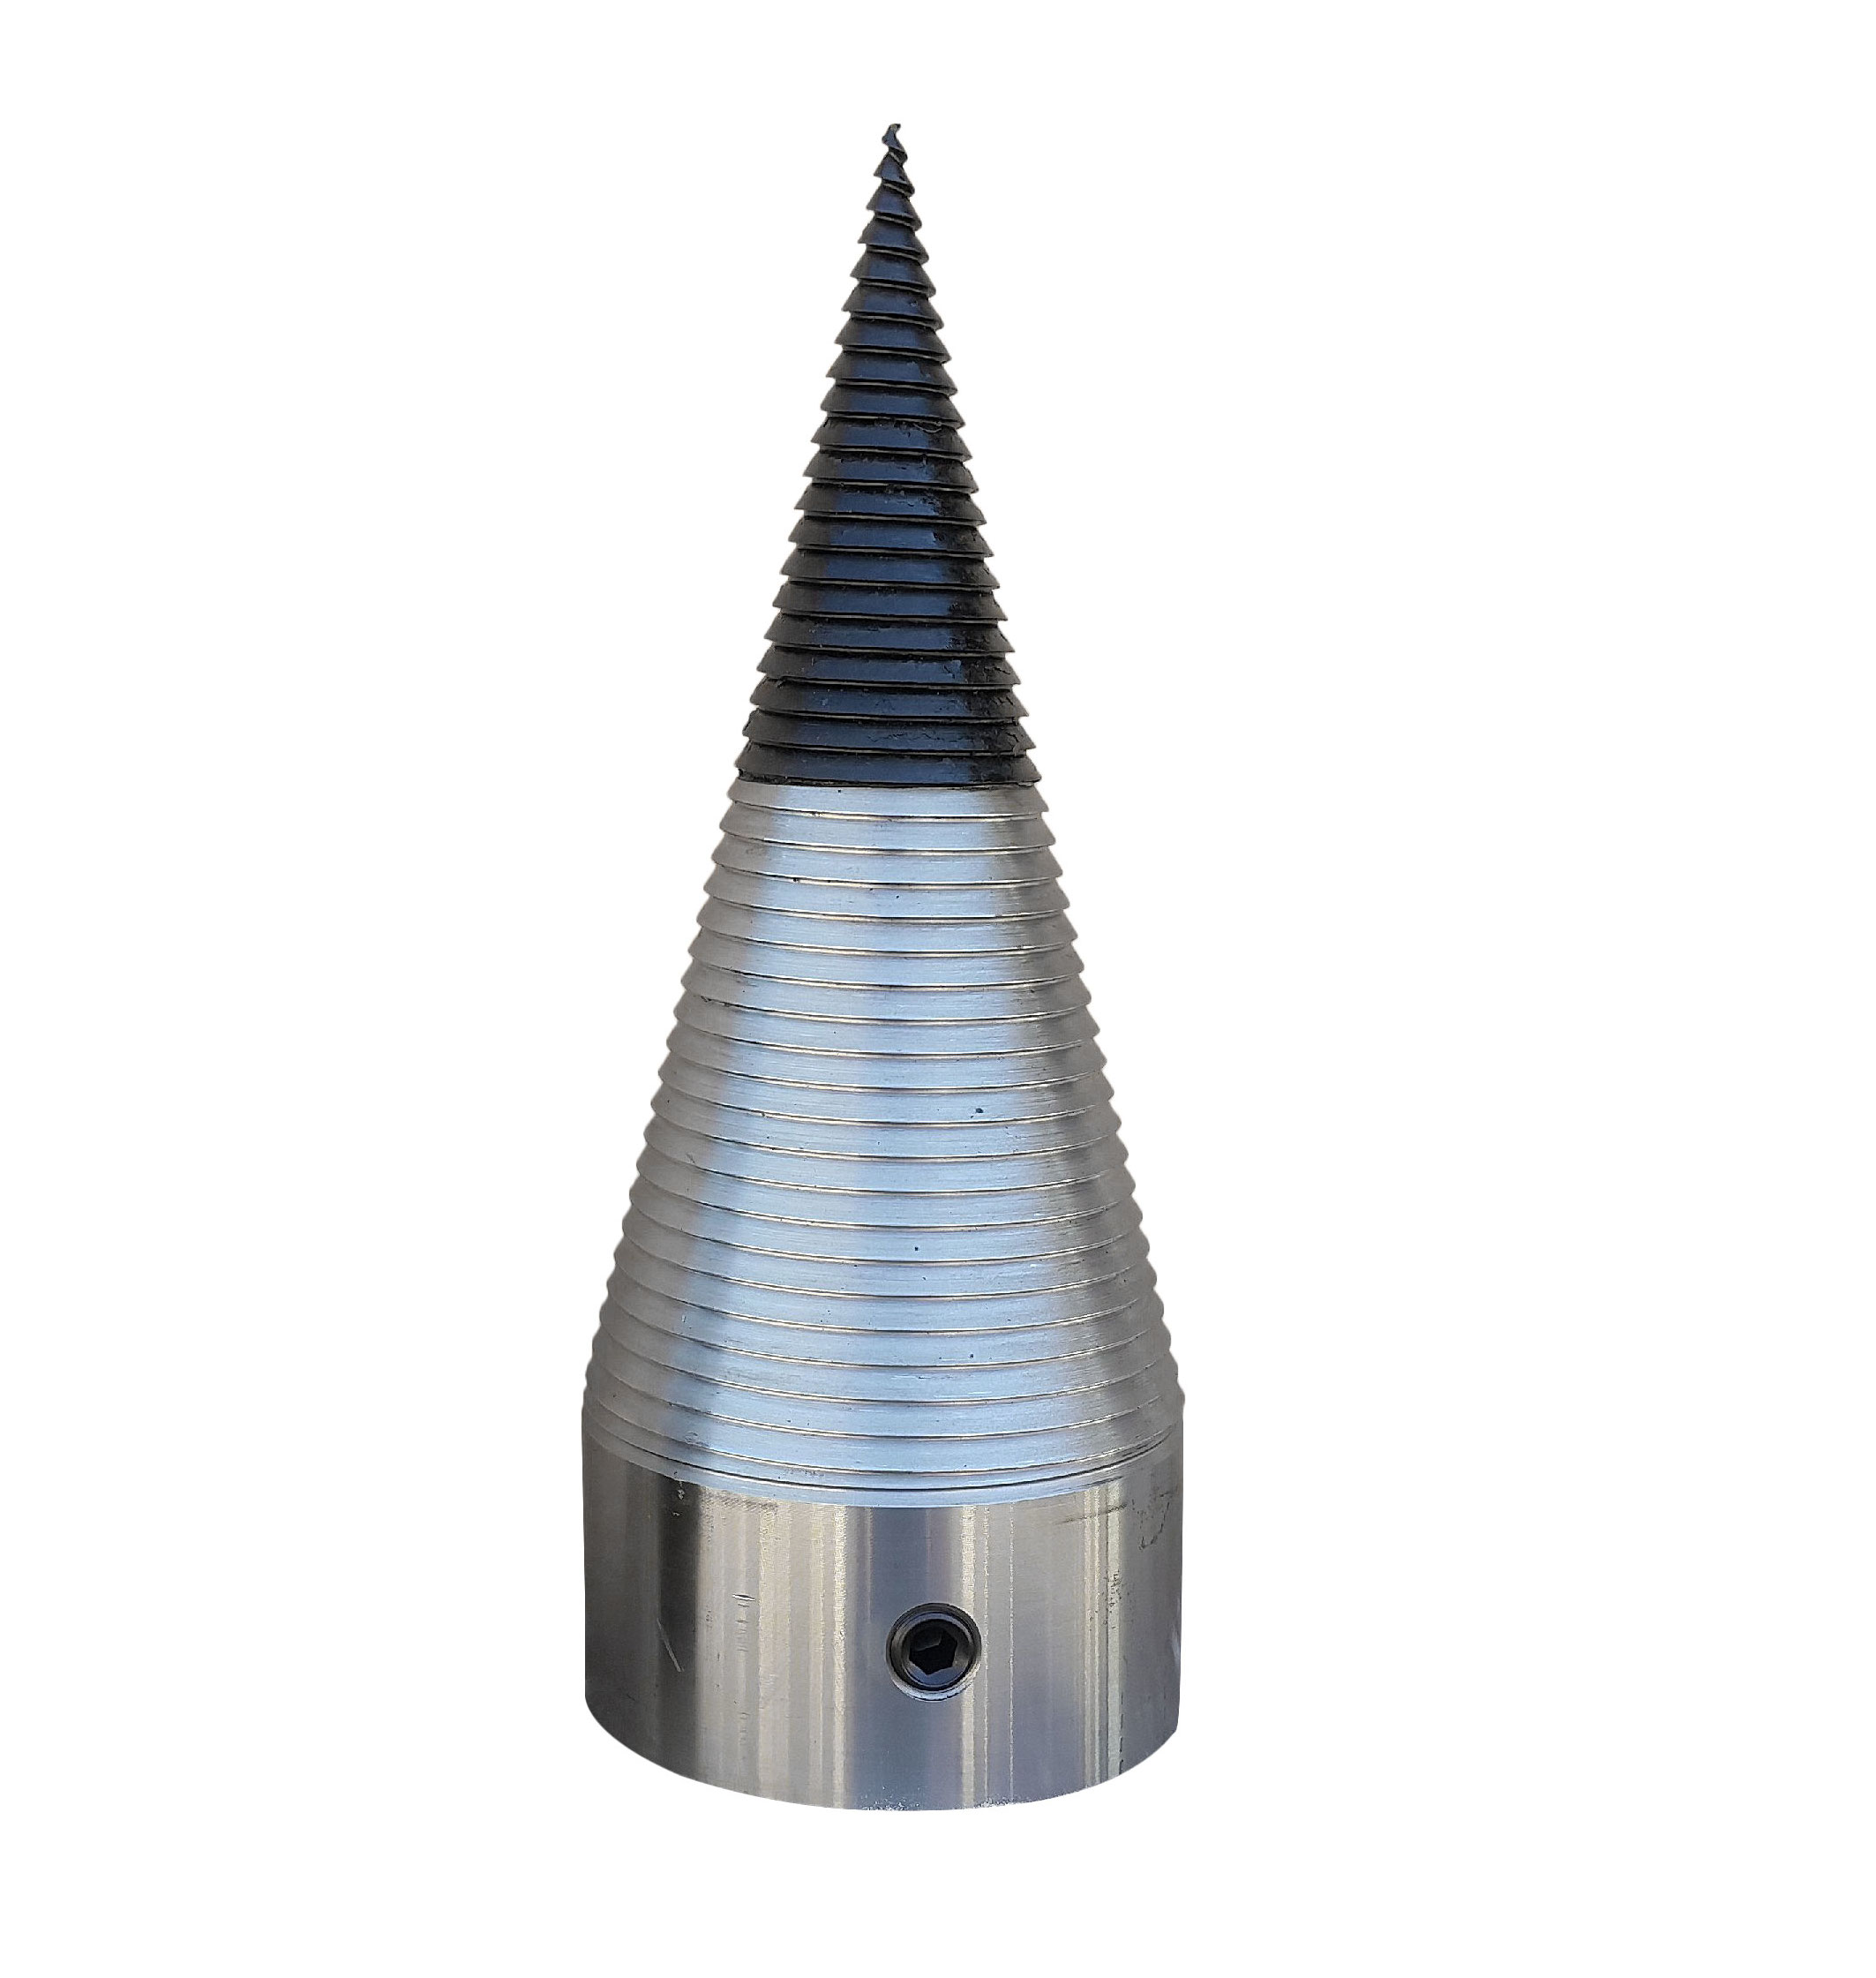 Drillkegel - Spaltkegel Joma-Tech Komplett mit austauschbarer Spitze - Aufnahme Ø 49,6mm